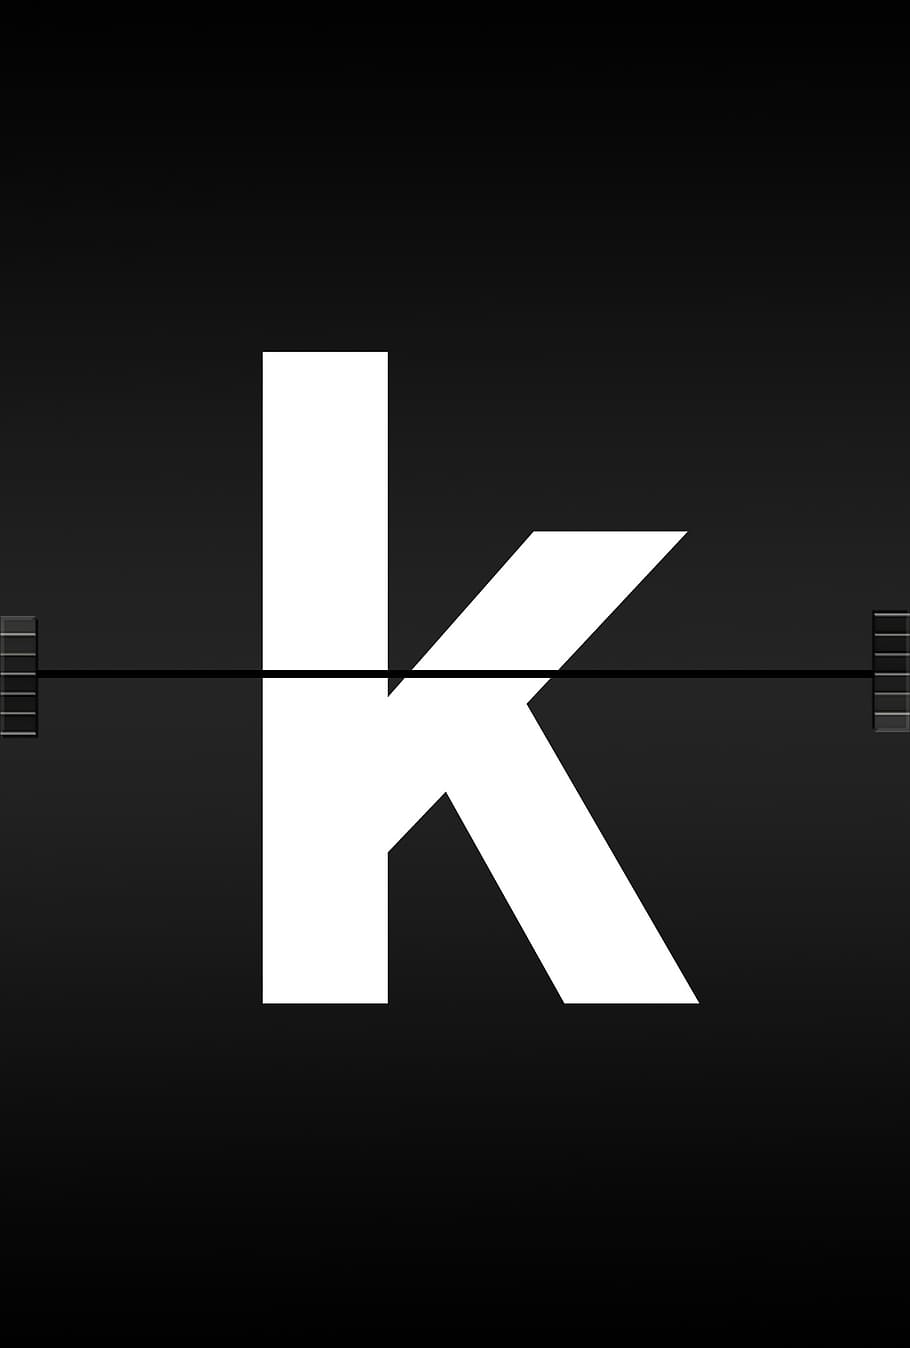 letter k logo, letters, abc, alphabet, journal font, airport, scoreboard, ad, railway station, board